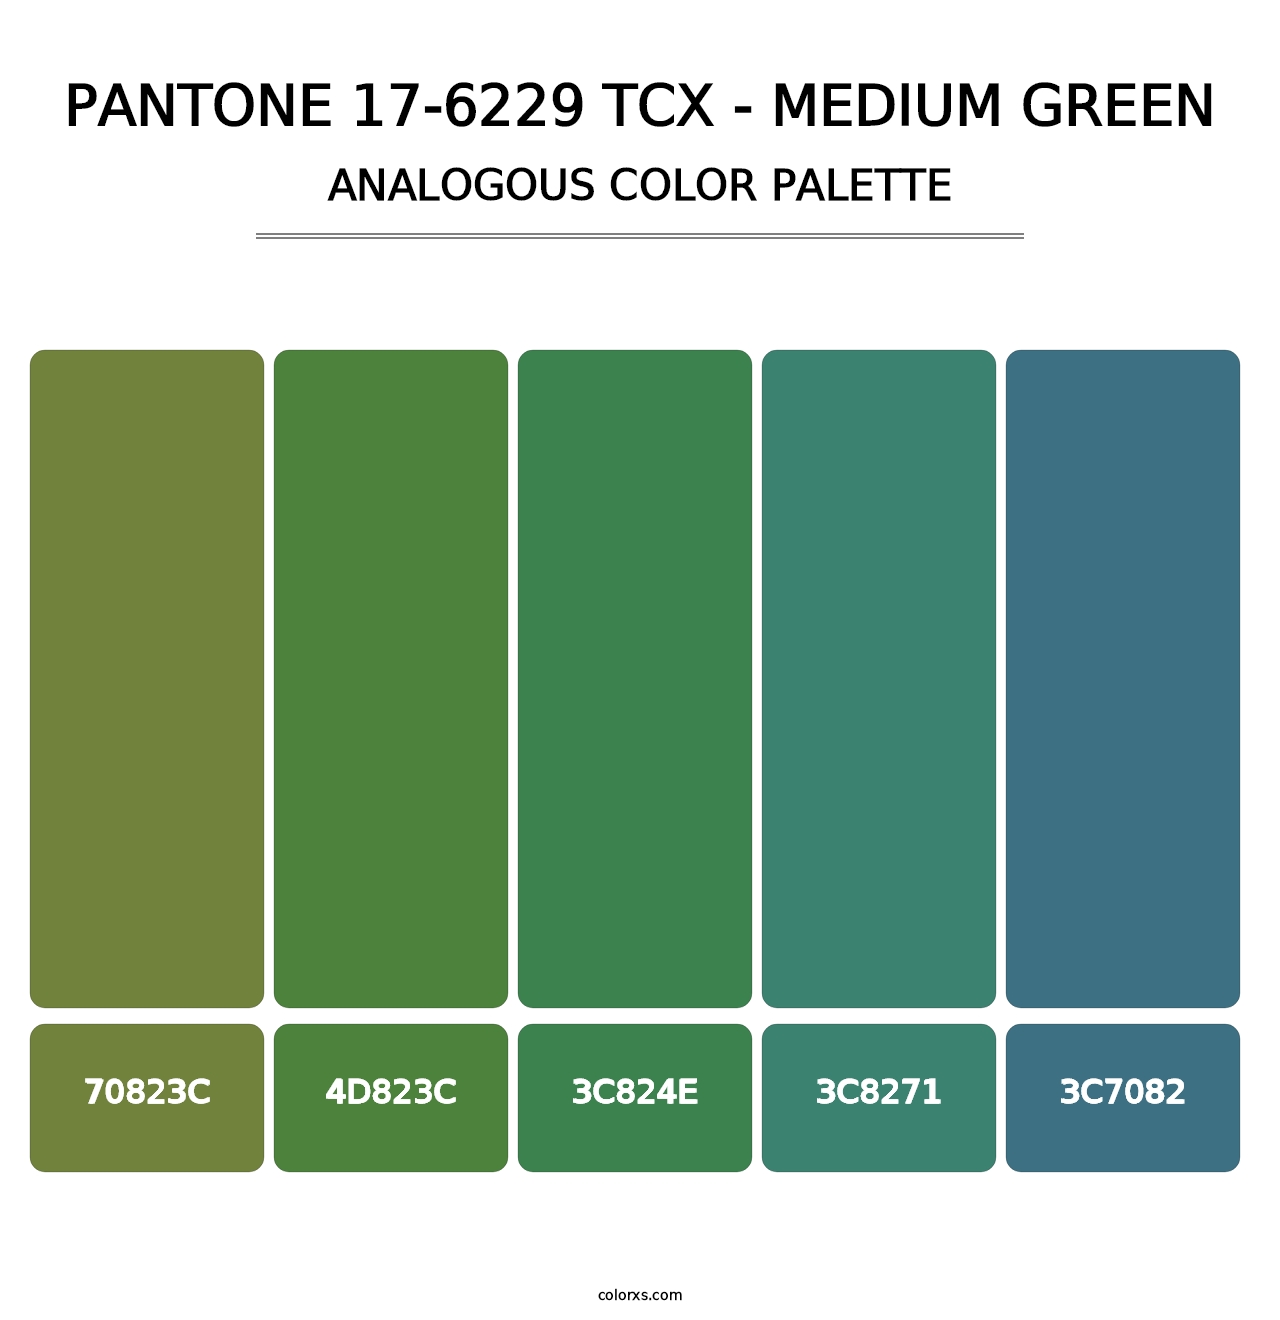 PANTONE 17-6229 TCX - Medium Green - Analogous Color Palette